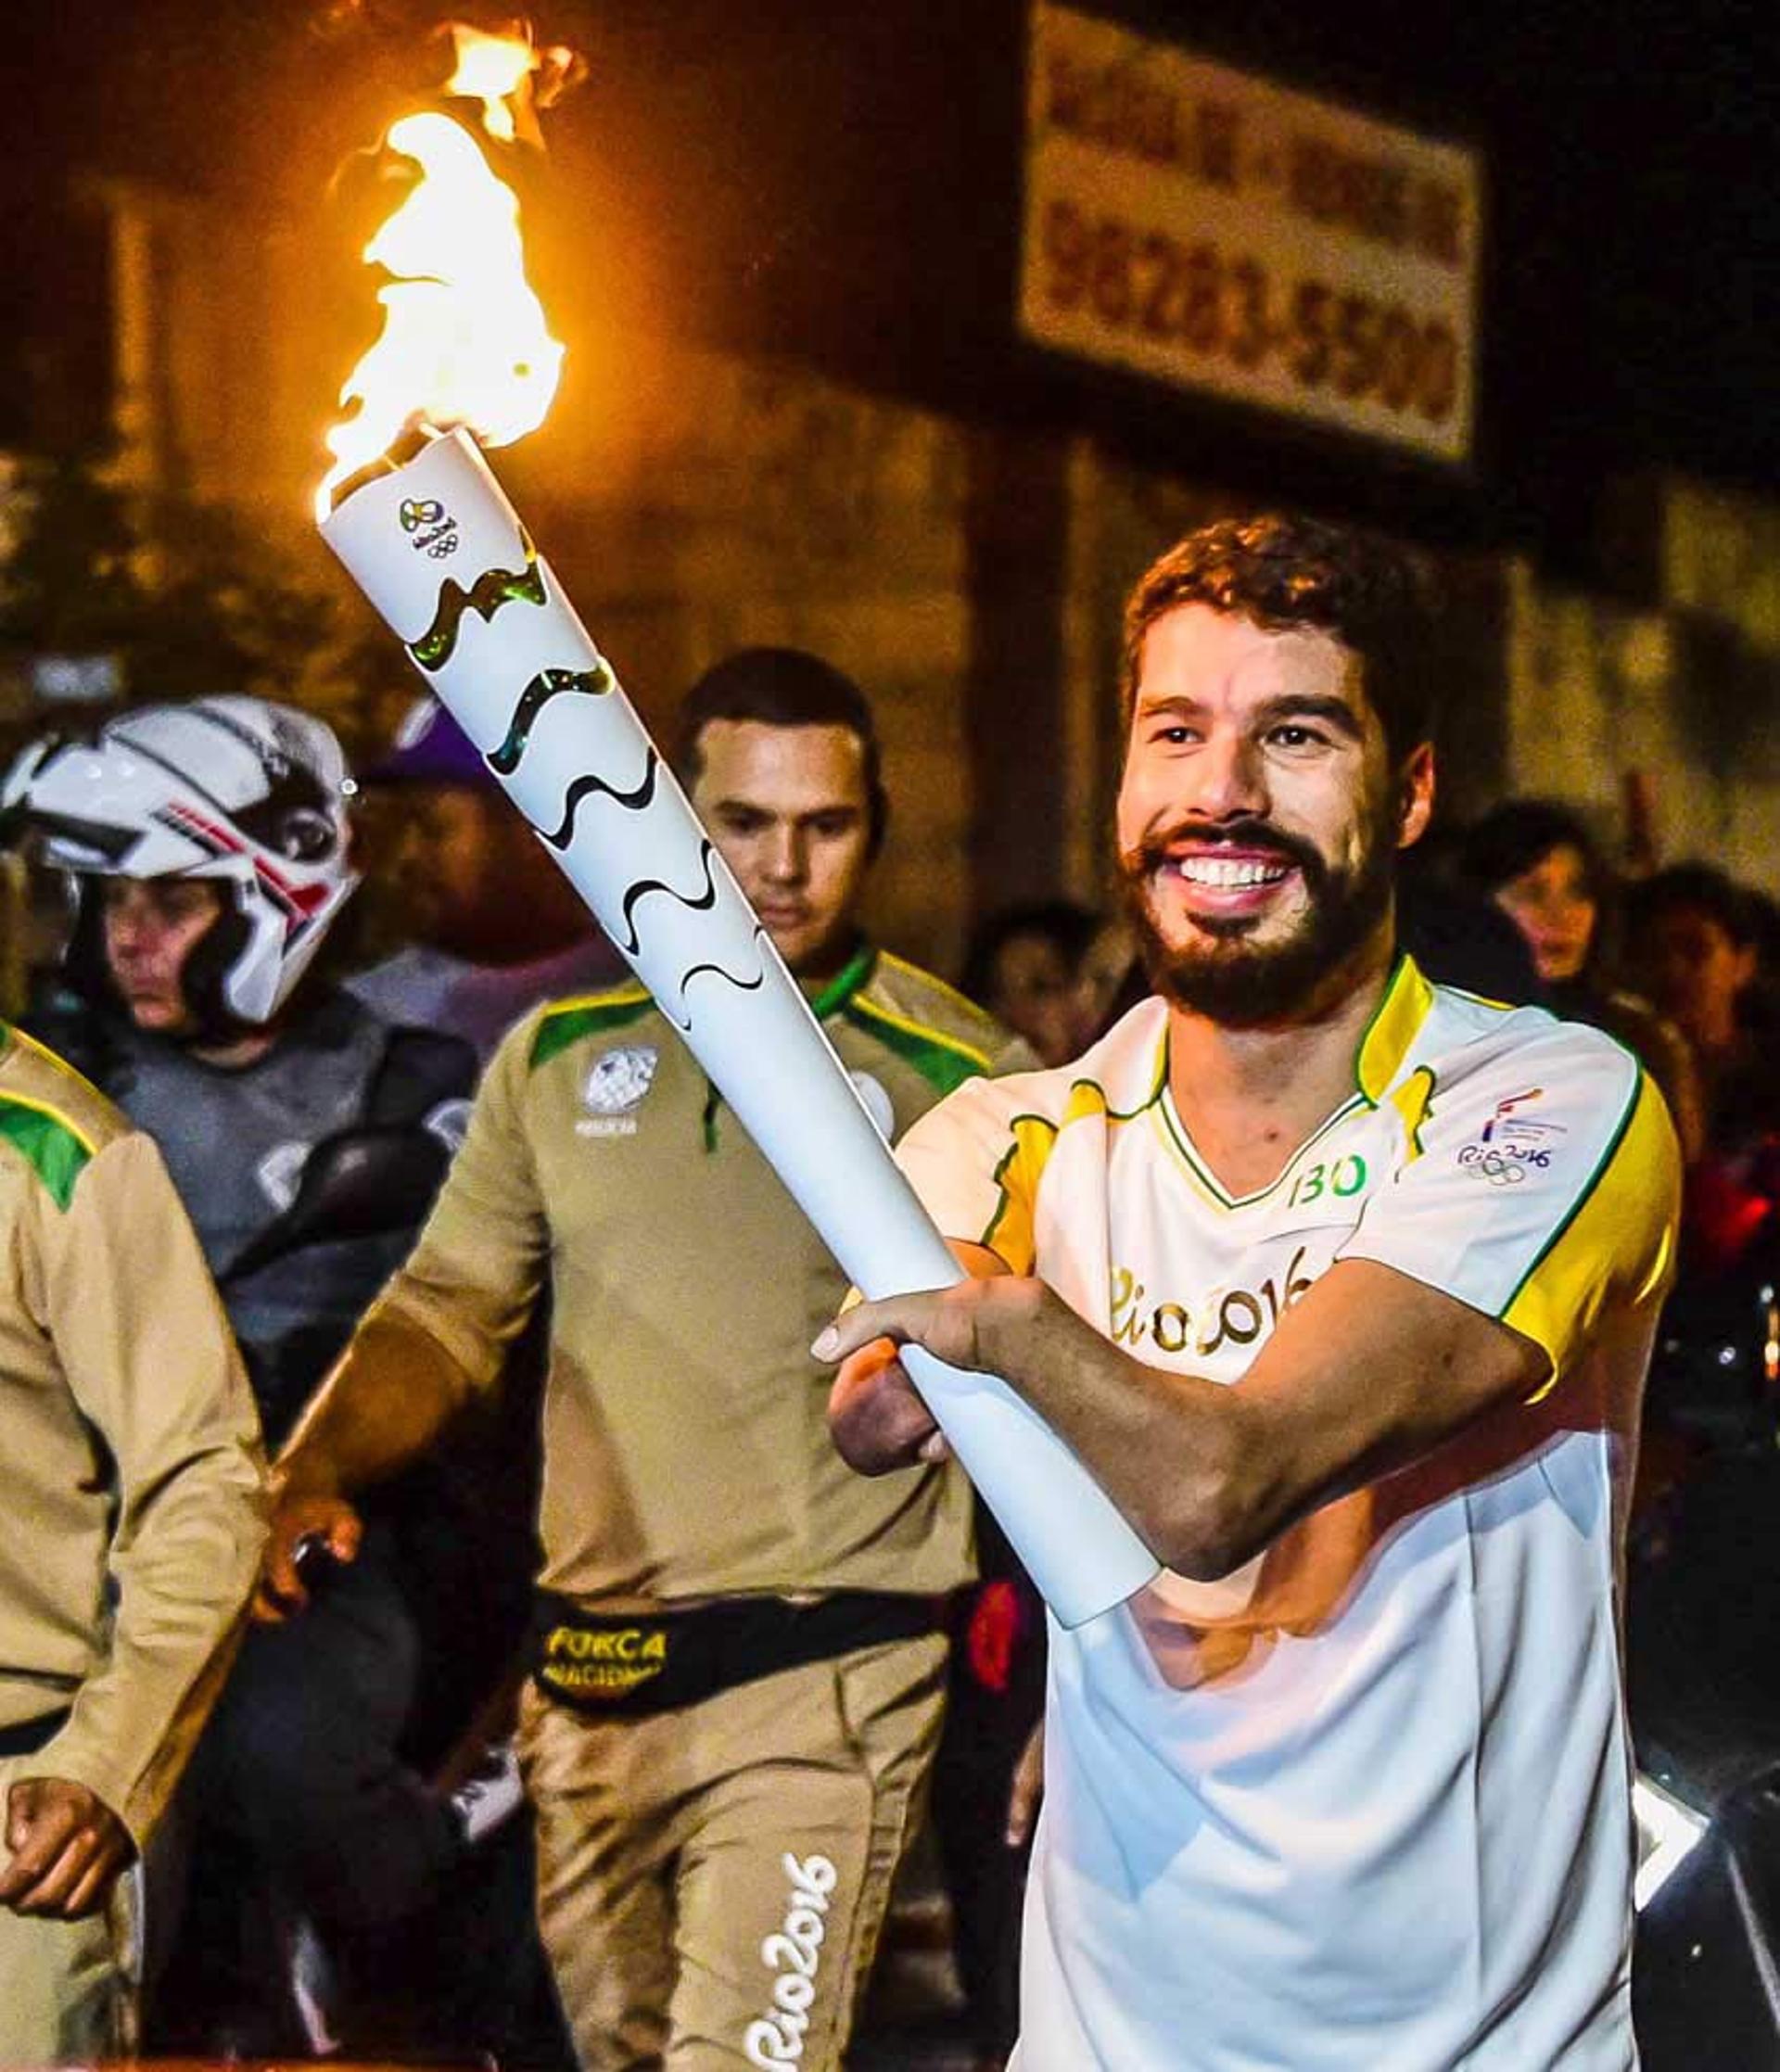 Daniel Dias Carrega a tocha olímpica (Foto: BRADESCO/Wander Roberto)